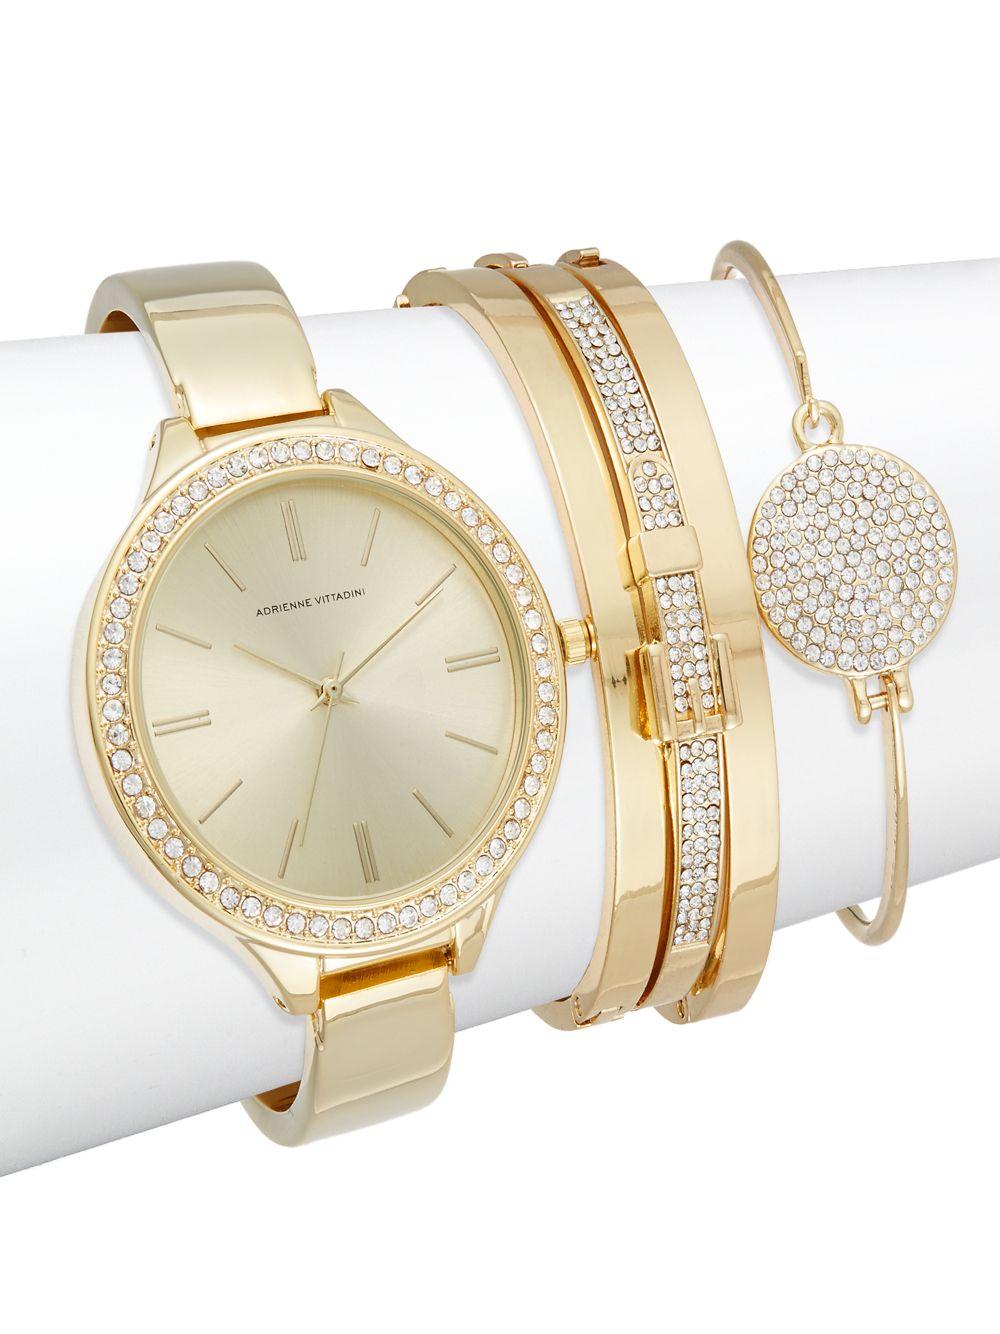 Lyst - Adrienne Vittadini Glitz Goldtone Bracelet Watch in Metallic